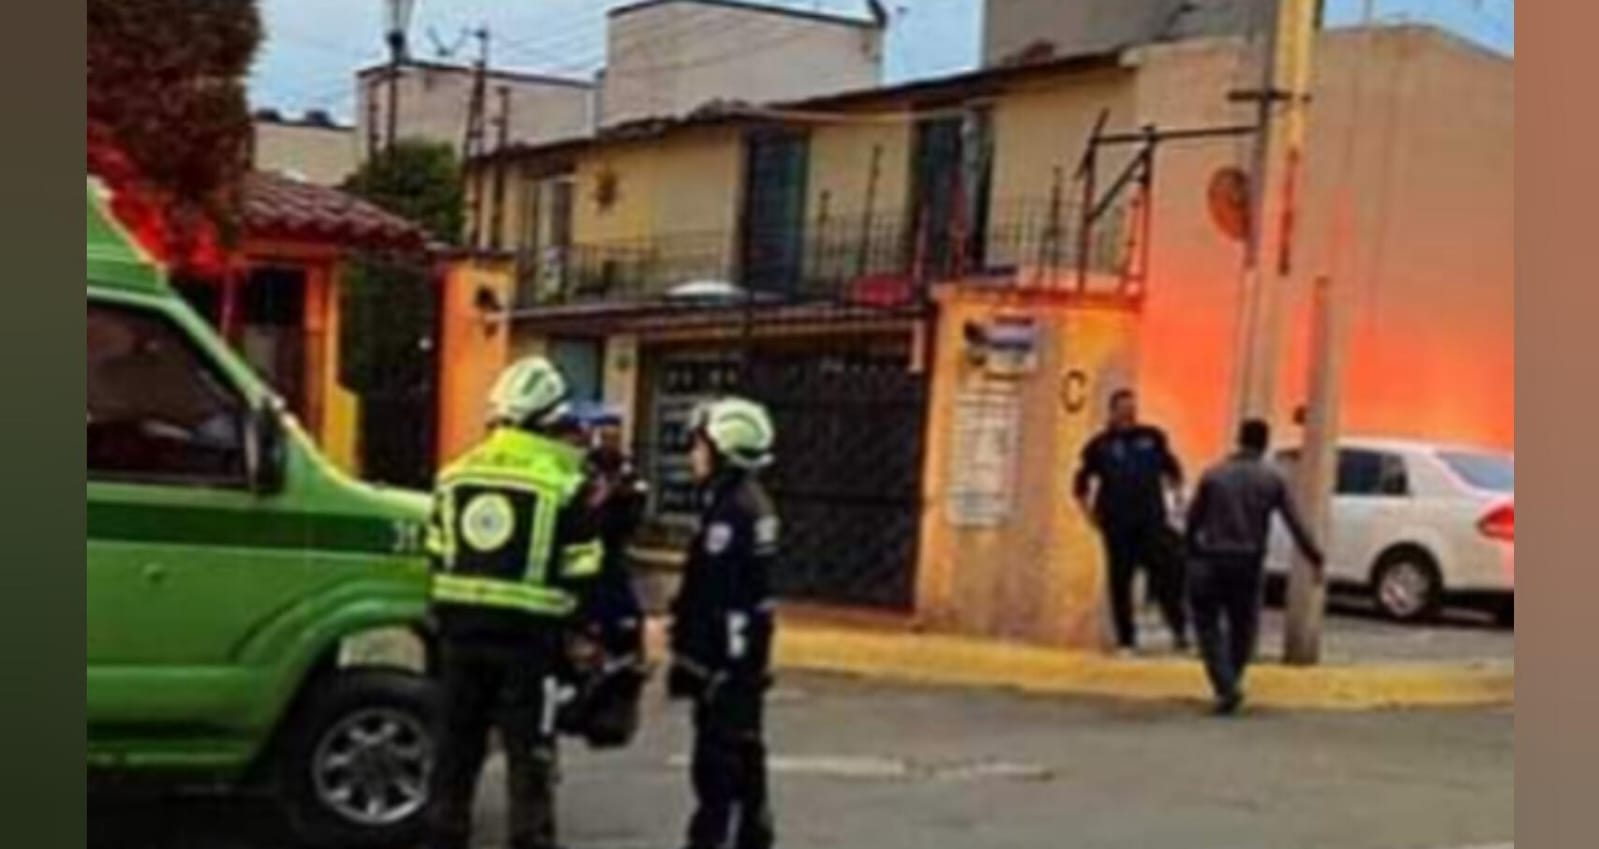 Tragedia en Toluca: Joven muere intoxicado. Foto: RRSS